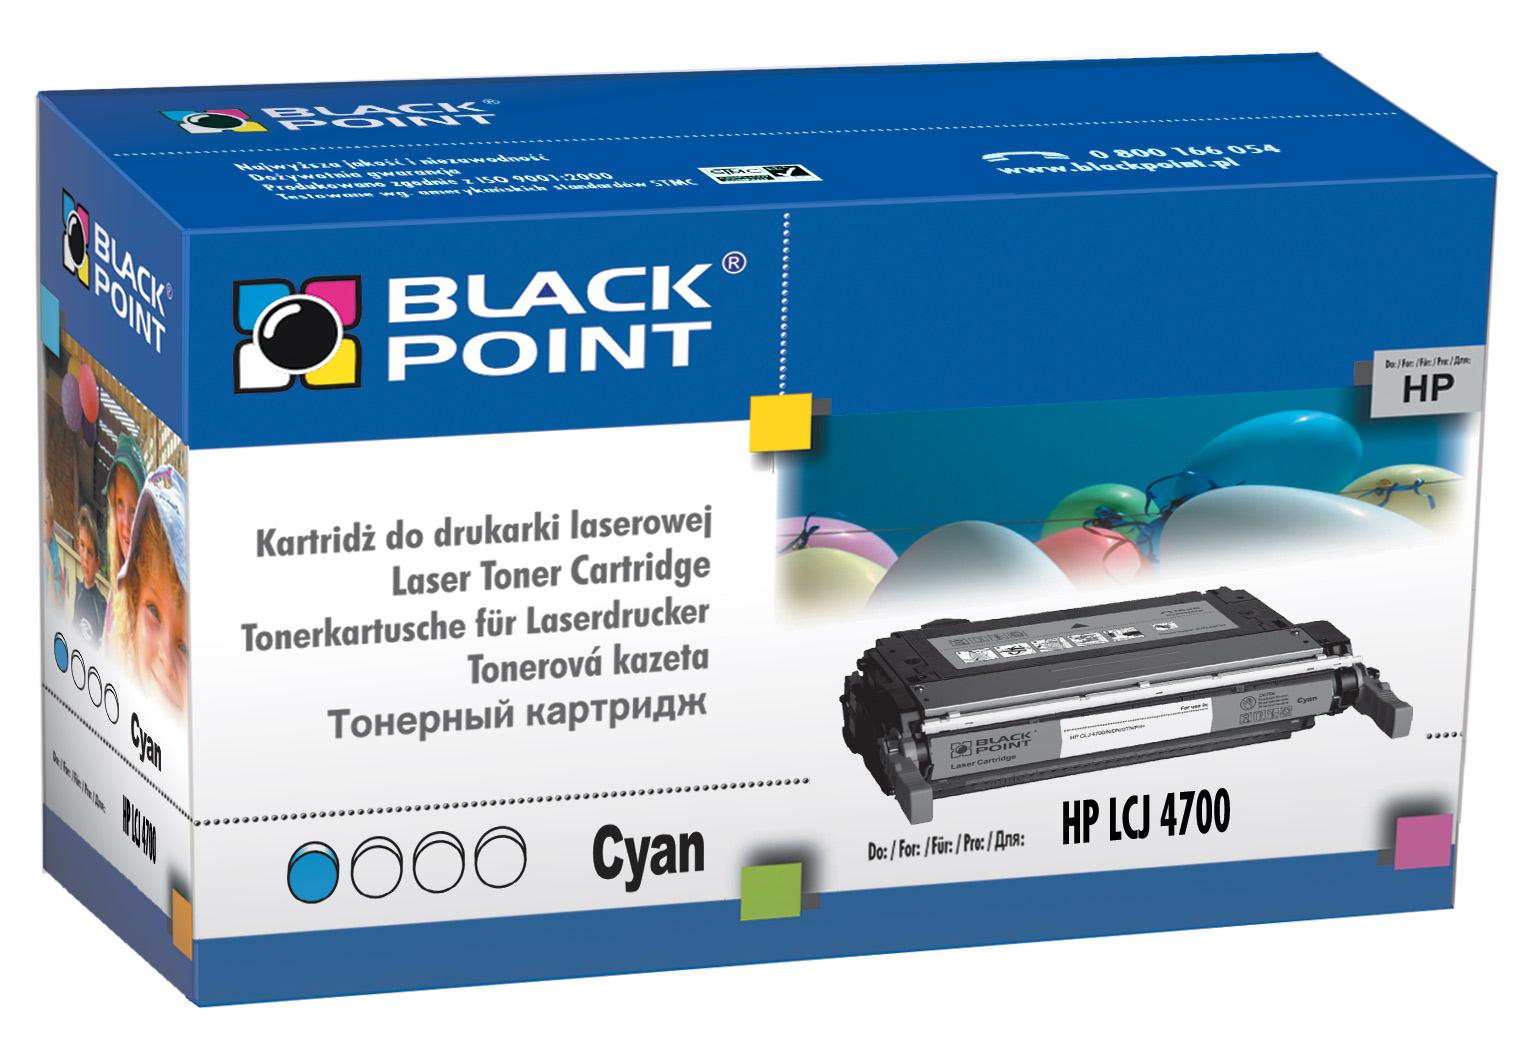 CMYK - Black Point toner LCBPH4700C zastpuje HP Q5951A, niebieski